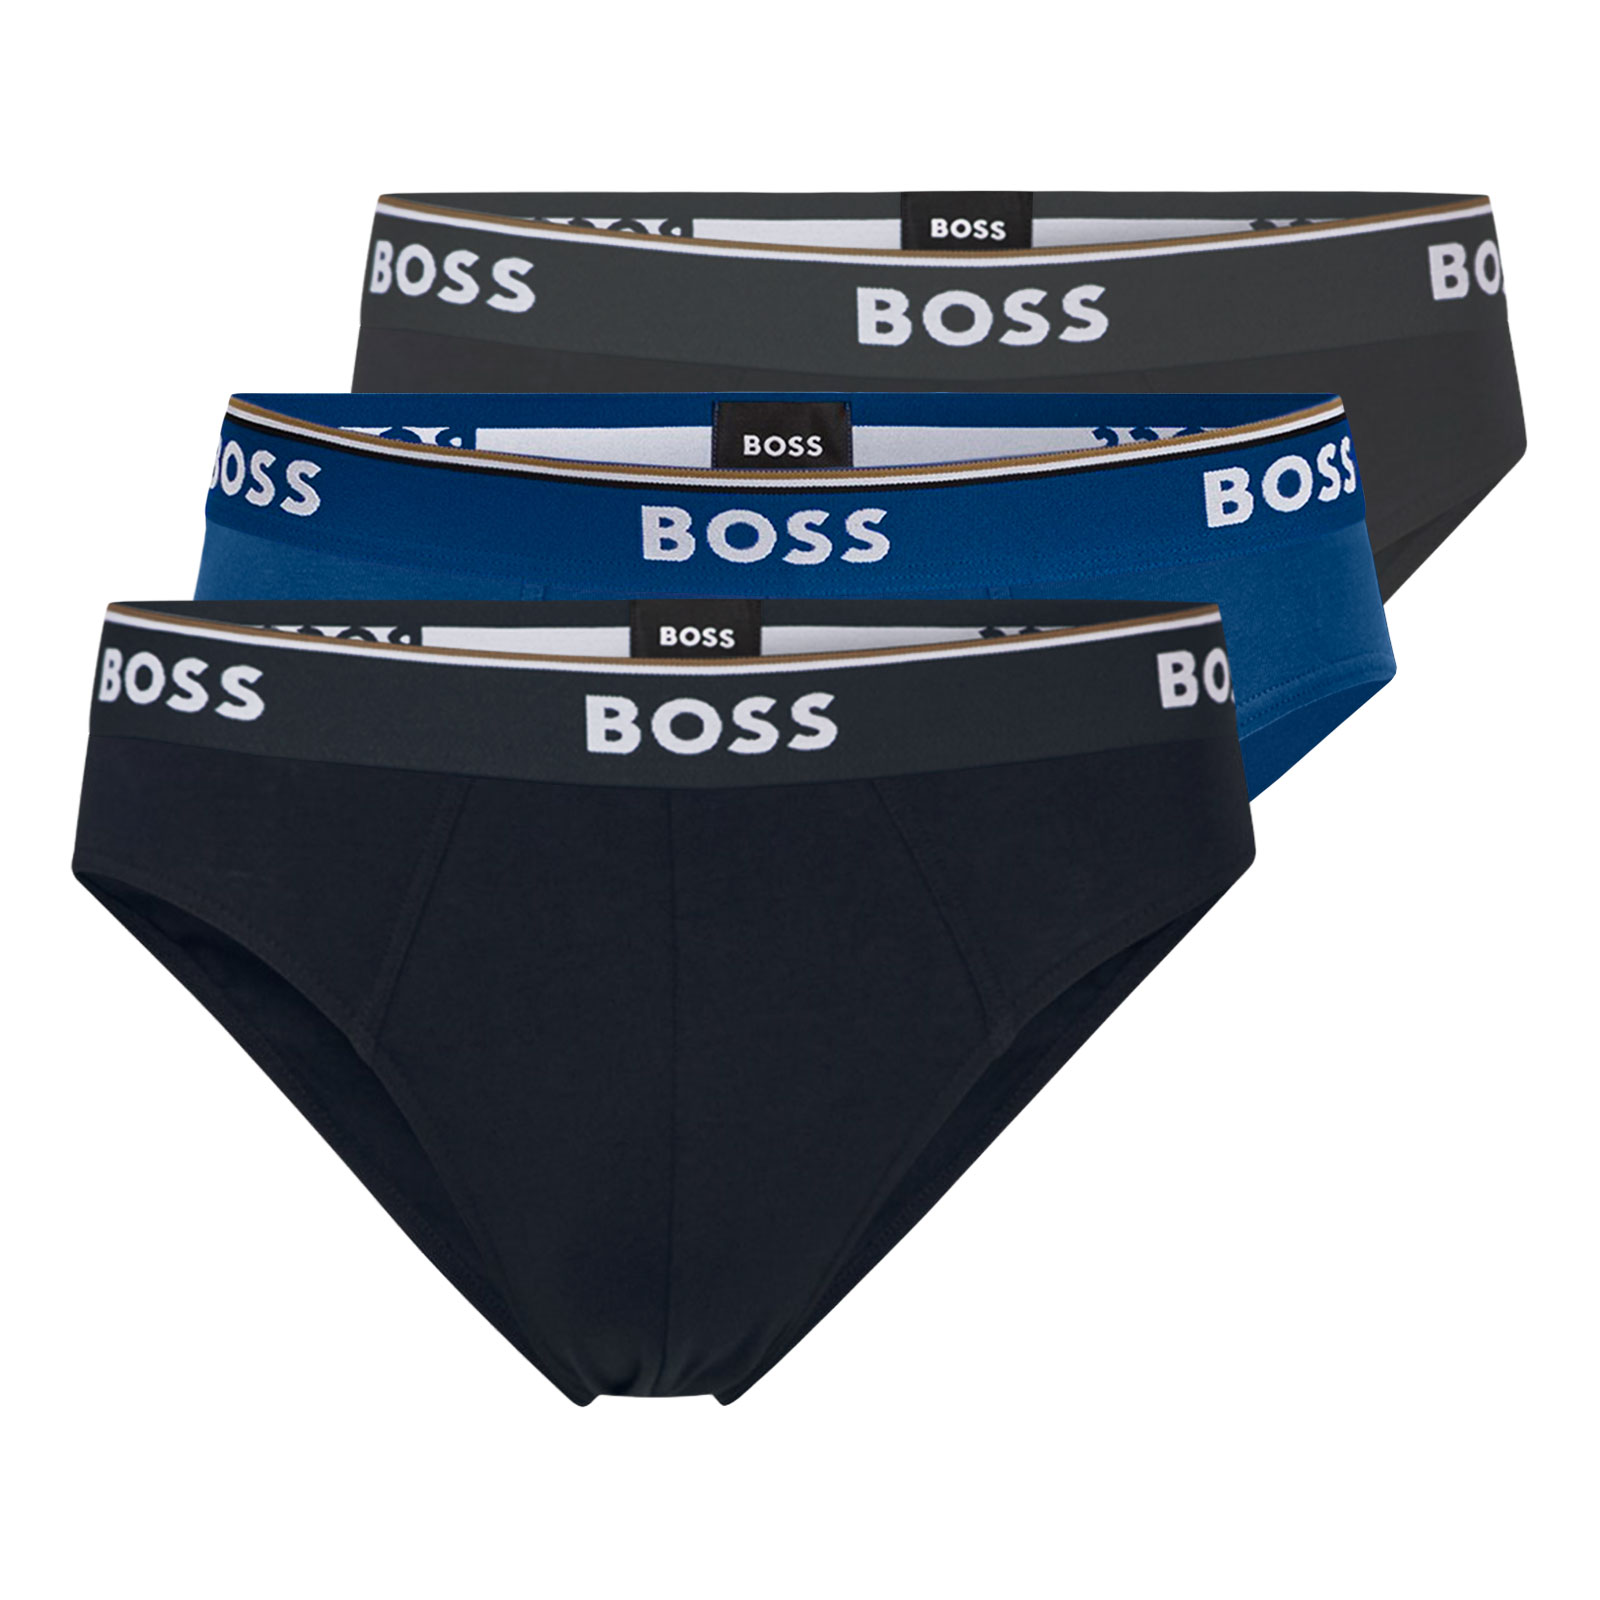 Hugo Boss 3 PACK - pánské slipy BOSS 50475273-487 L